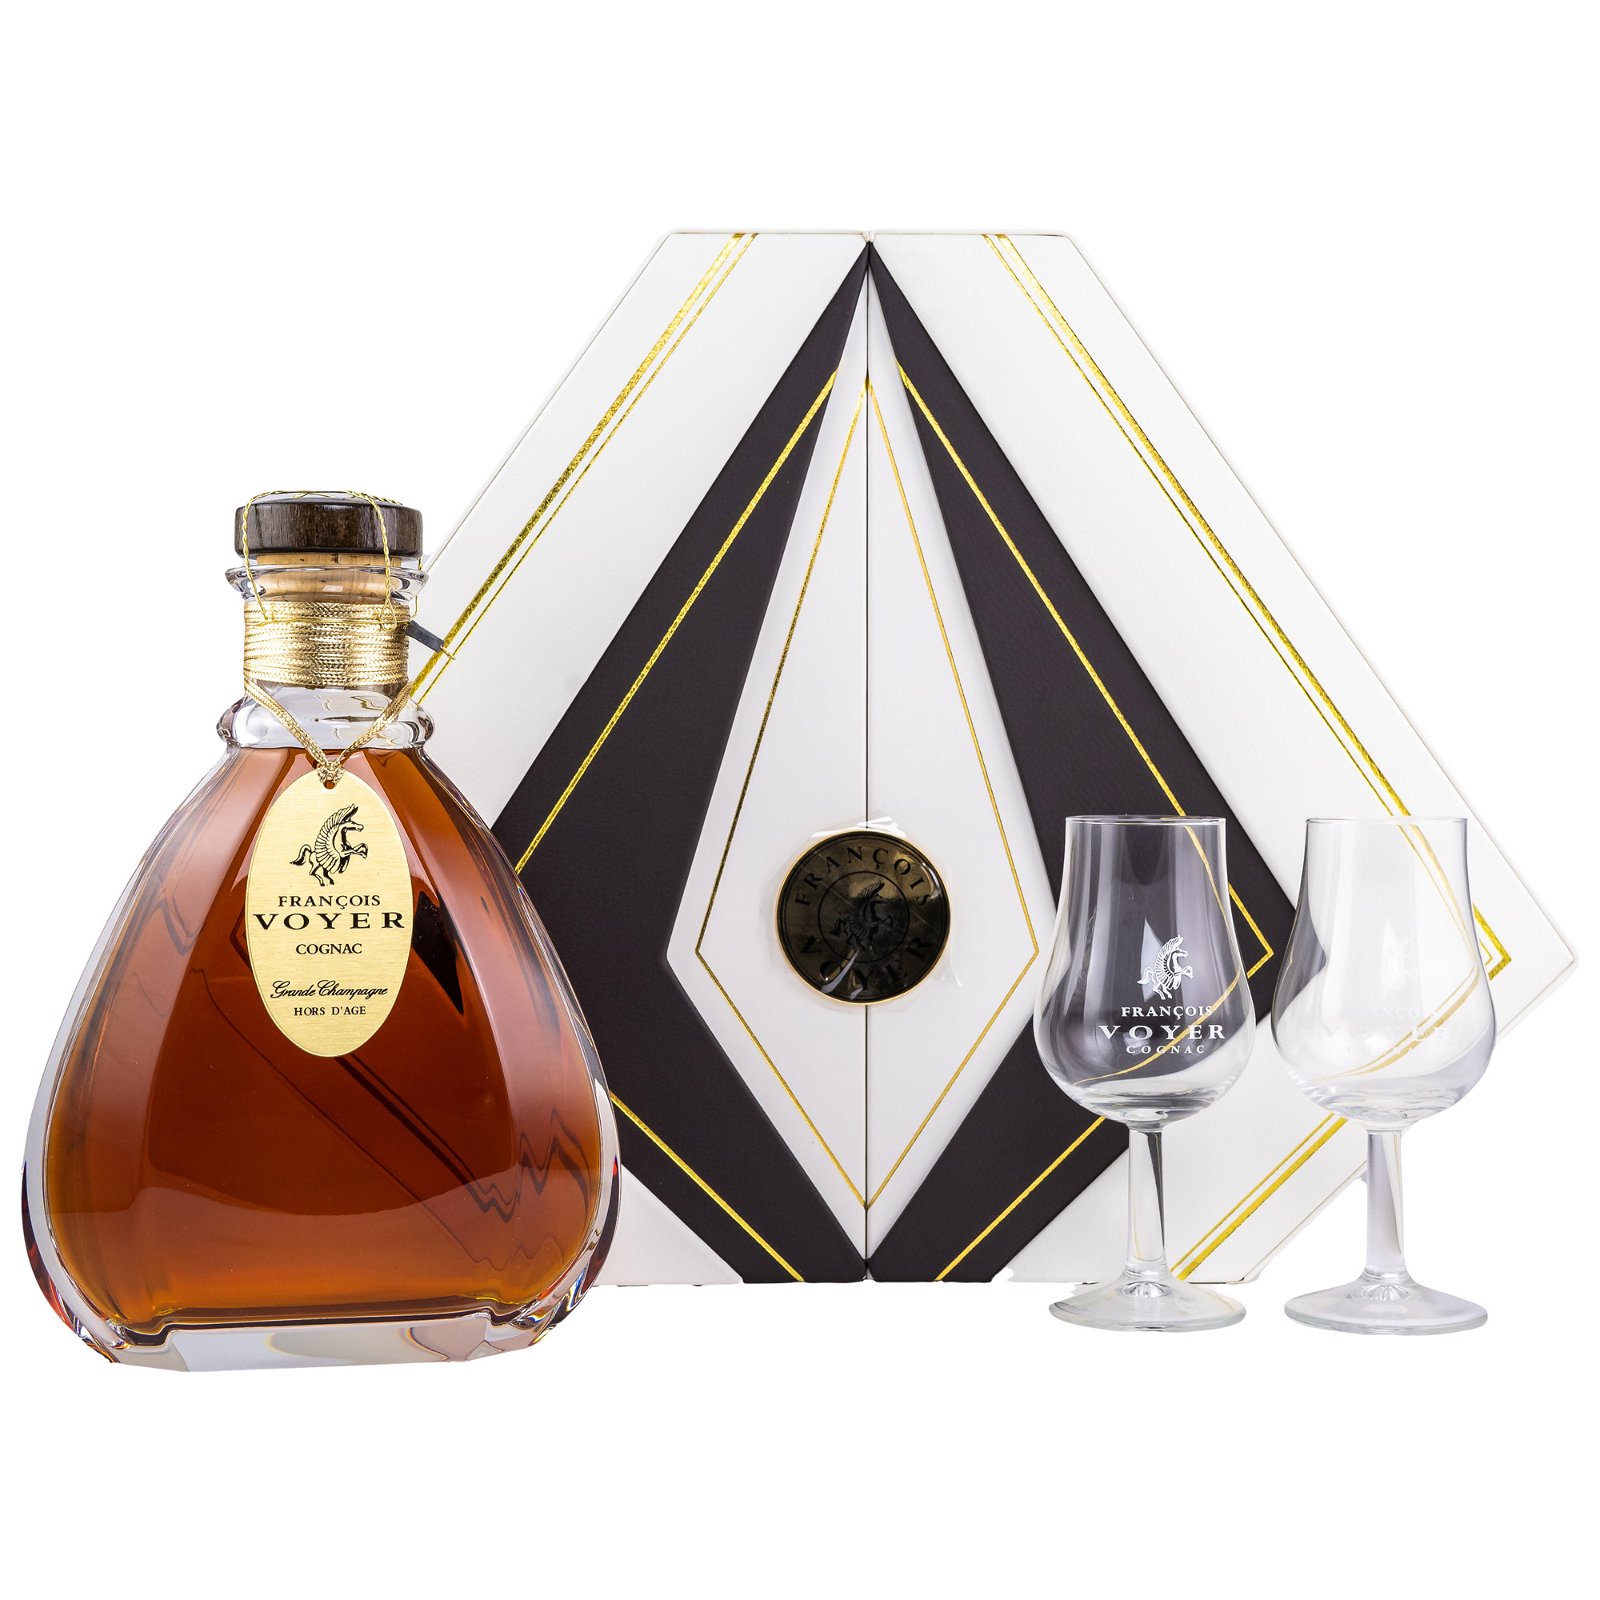 Francois Voyer Hors d'Age Cristal Grande Champagne Cognac mit 2 Gläsern